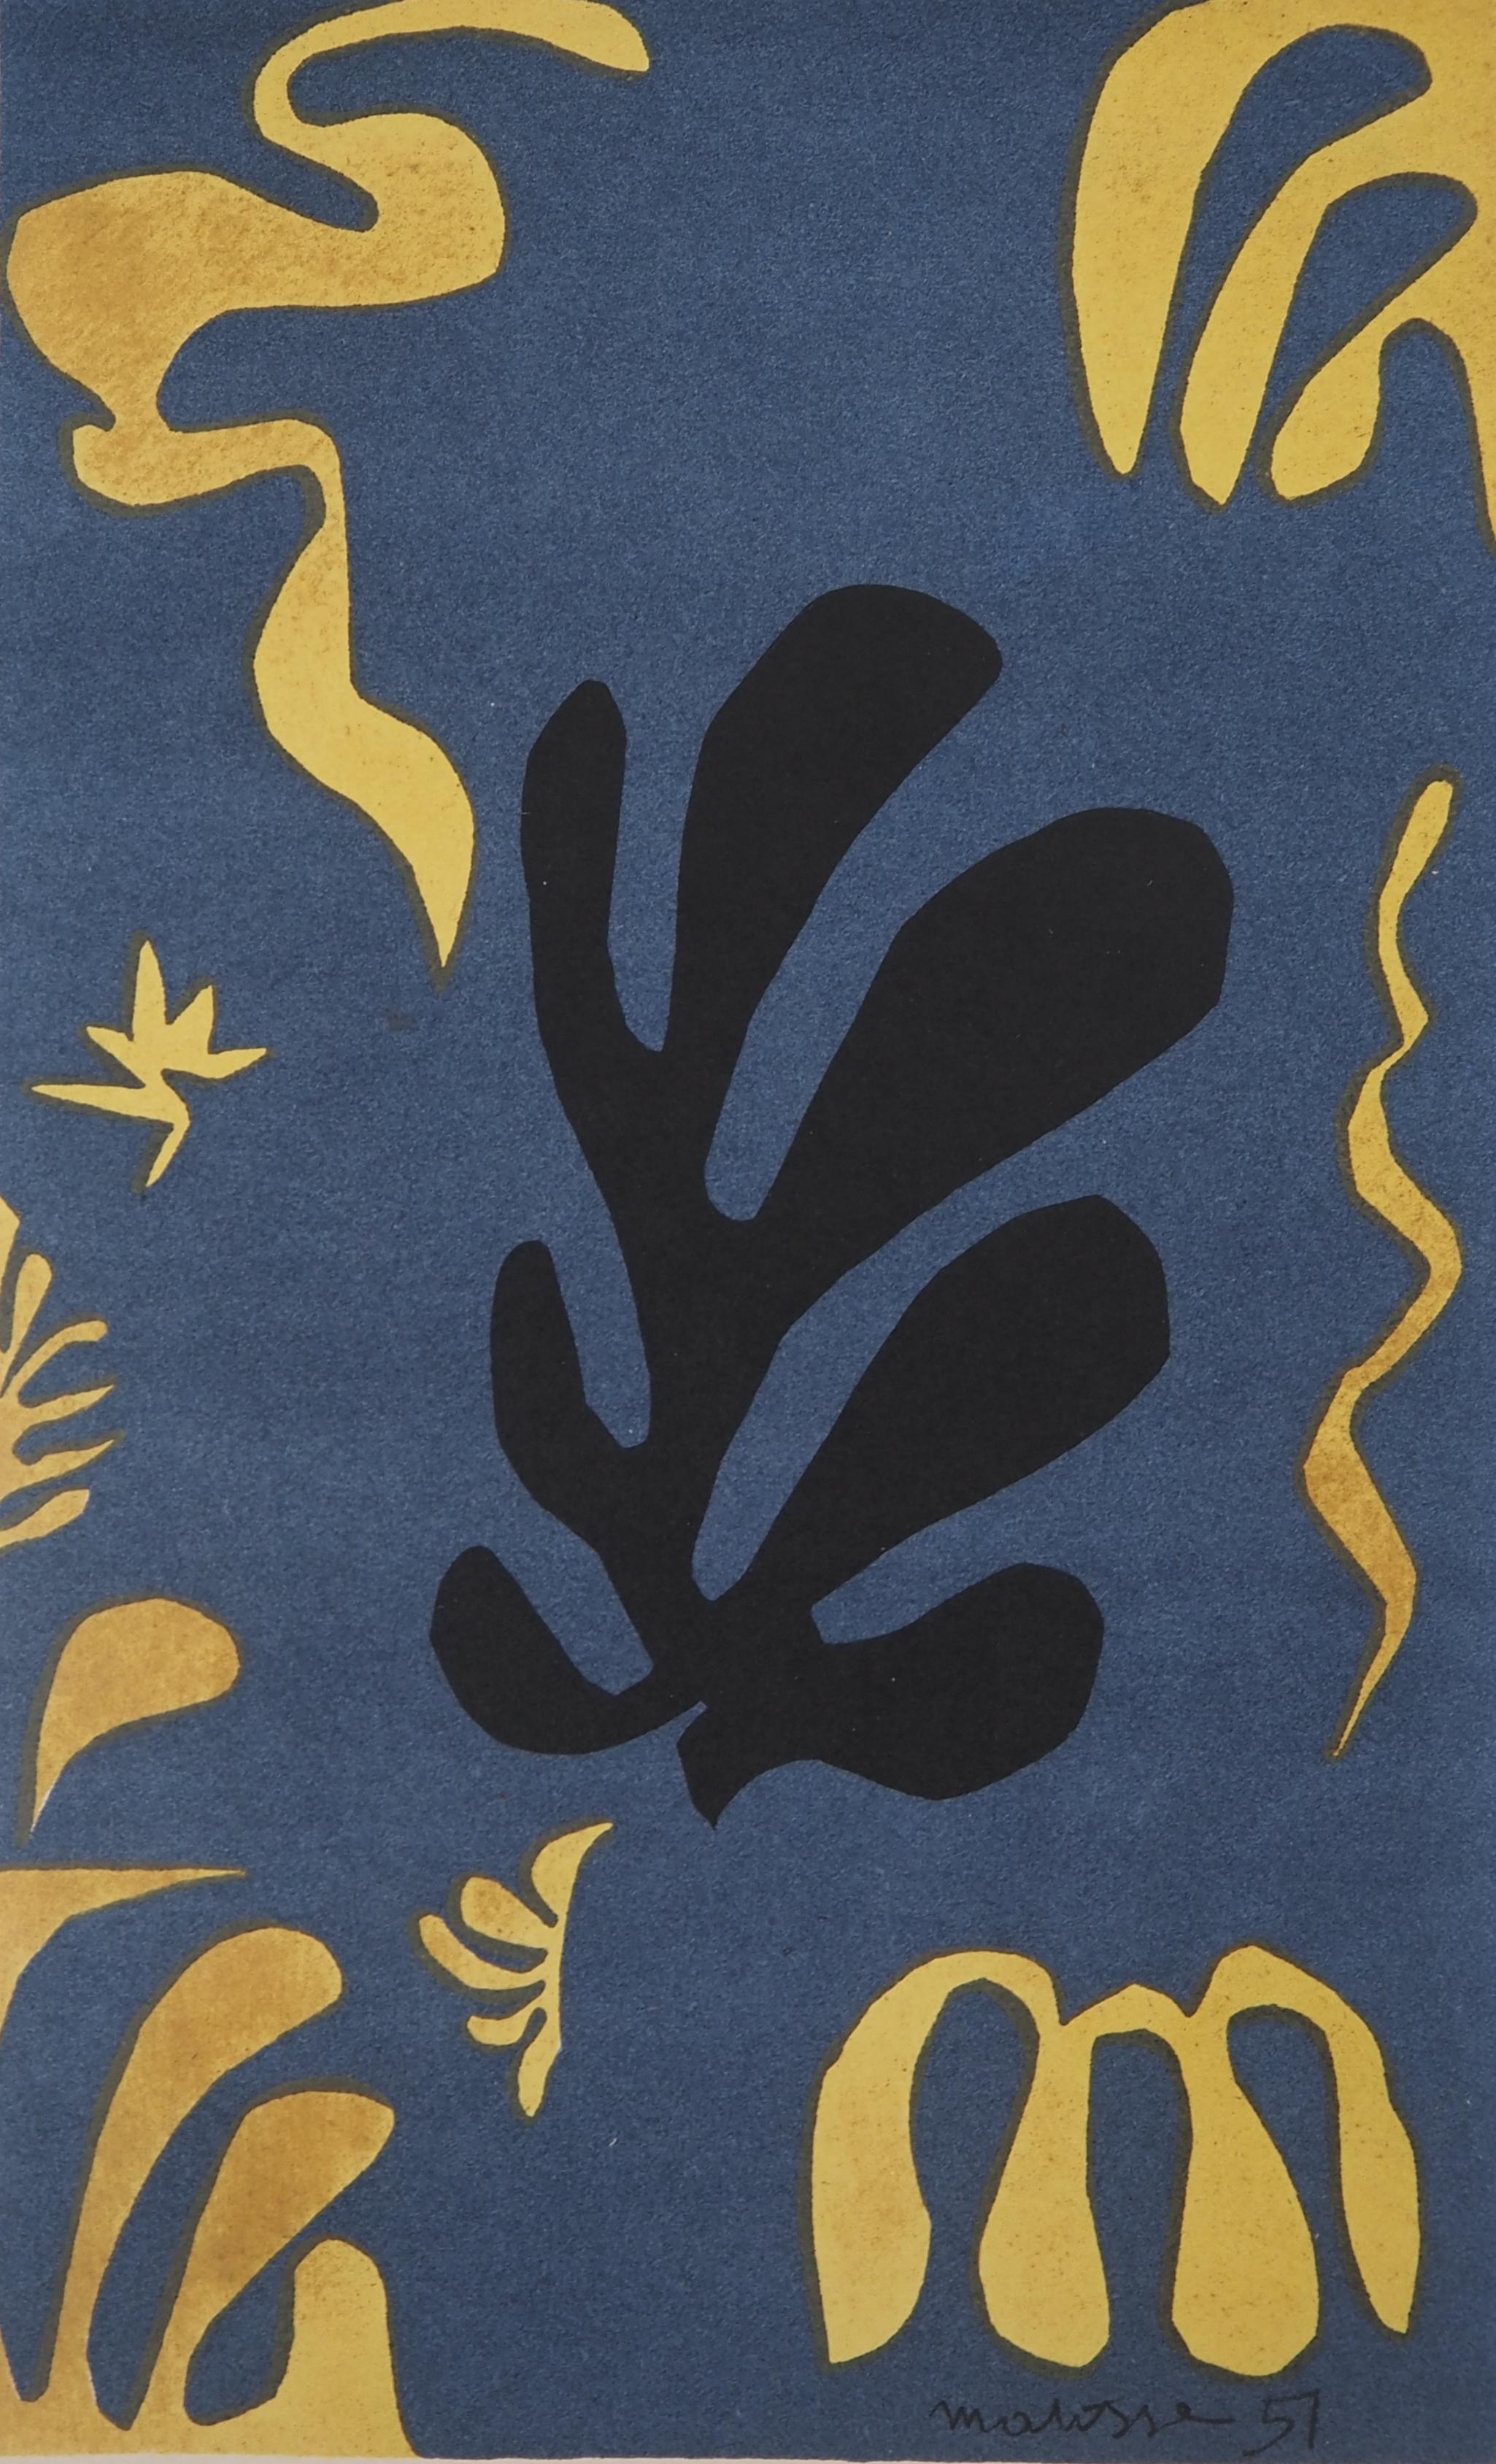 Underwater life - Lithograph - San Lazzaro 1954 - Modern Print by Henri Matisse